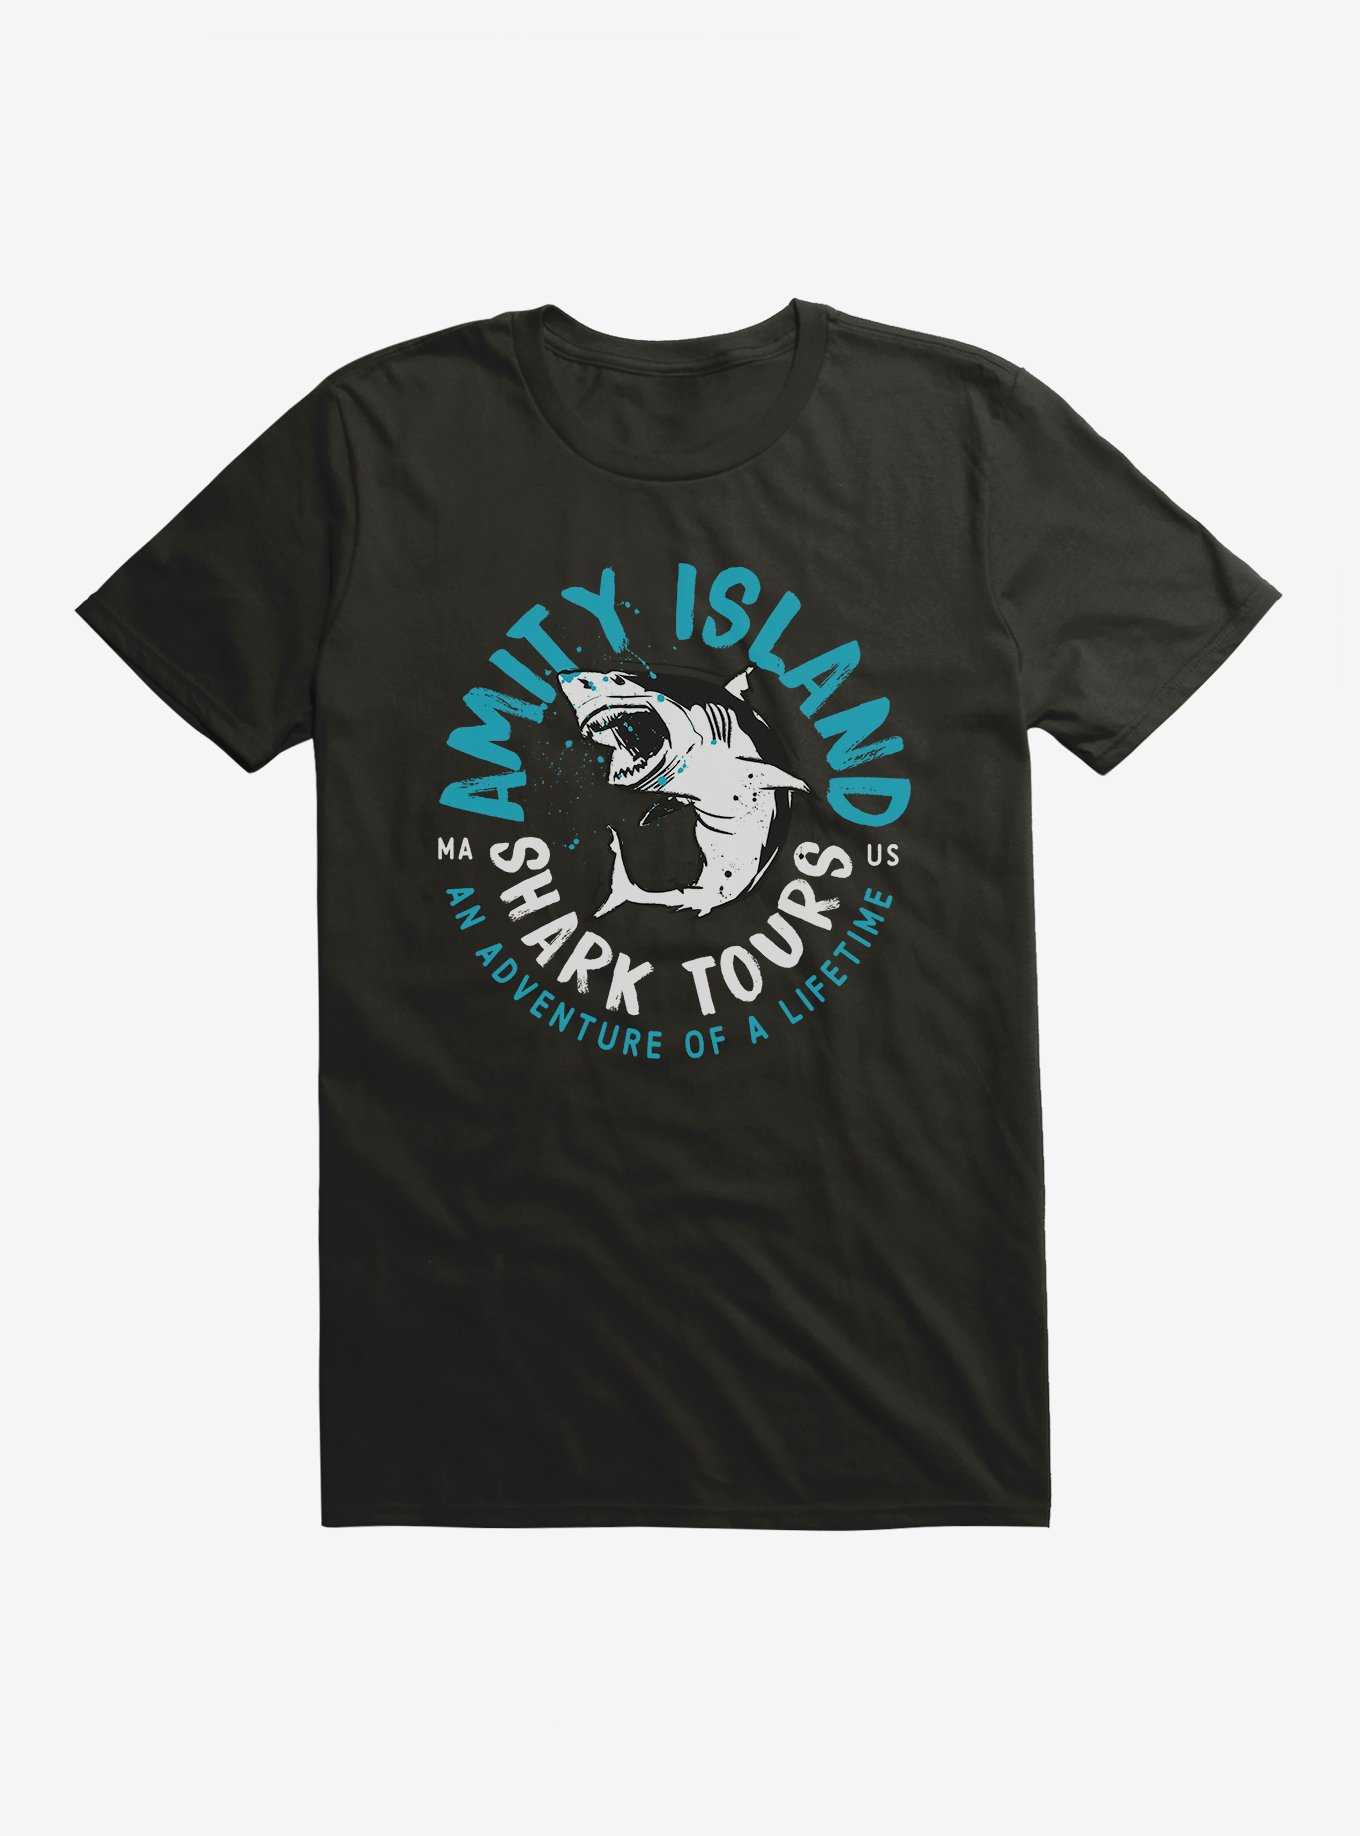 Jaws Amity Island Shark Tours T-Shirt, , hi-res